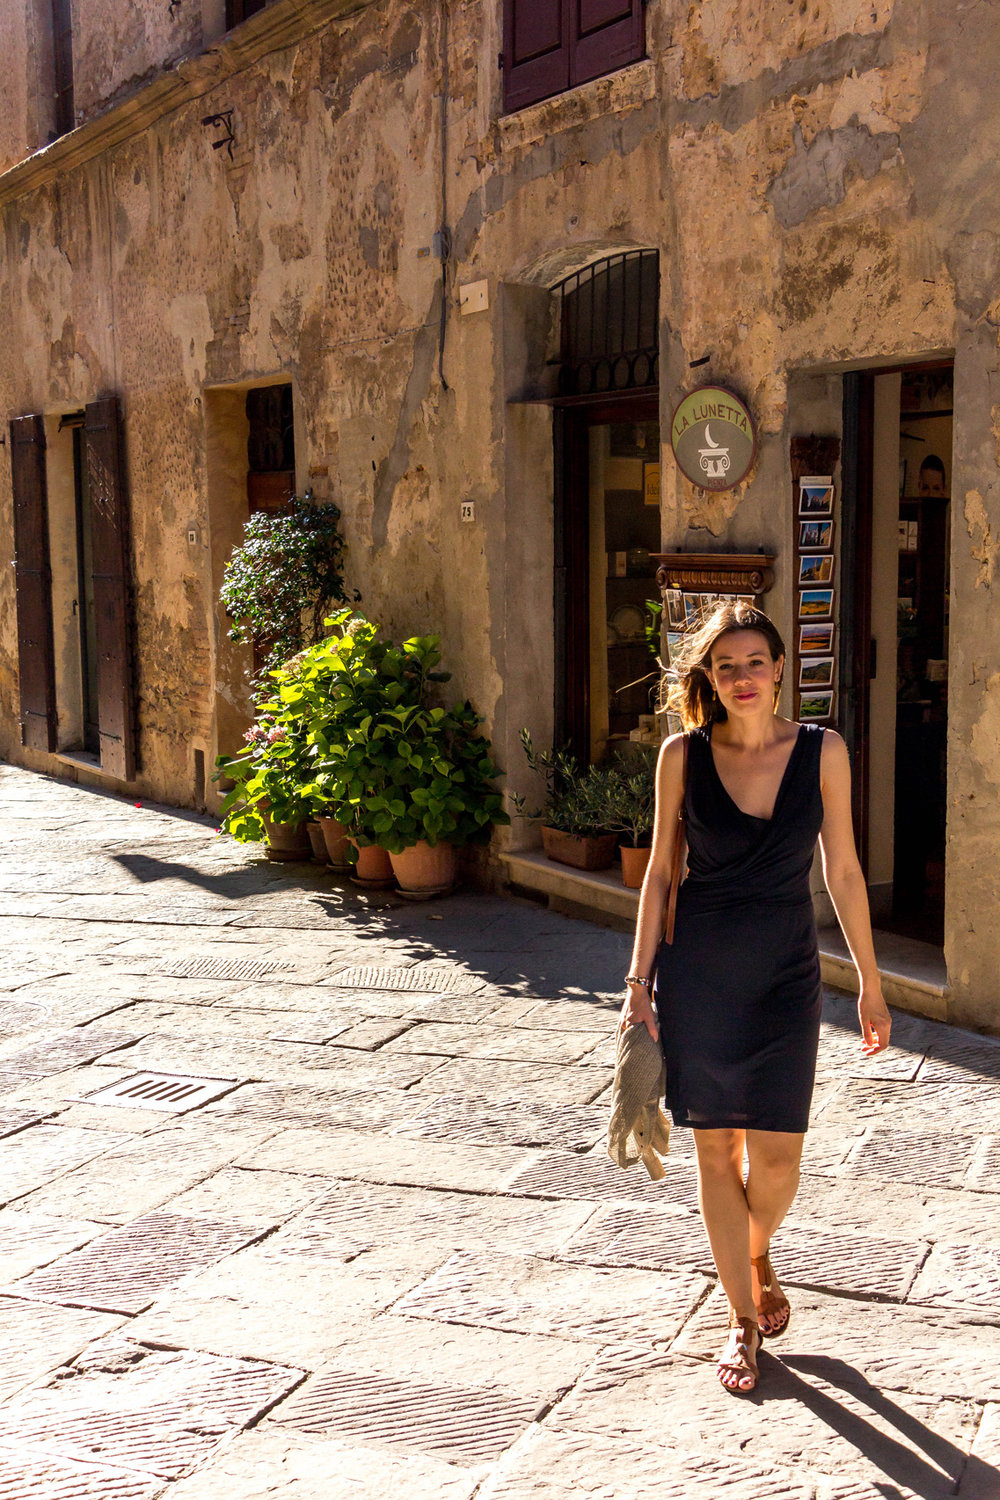 Walking the streets of Pienza, Tuscany